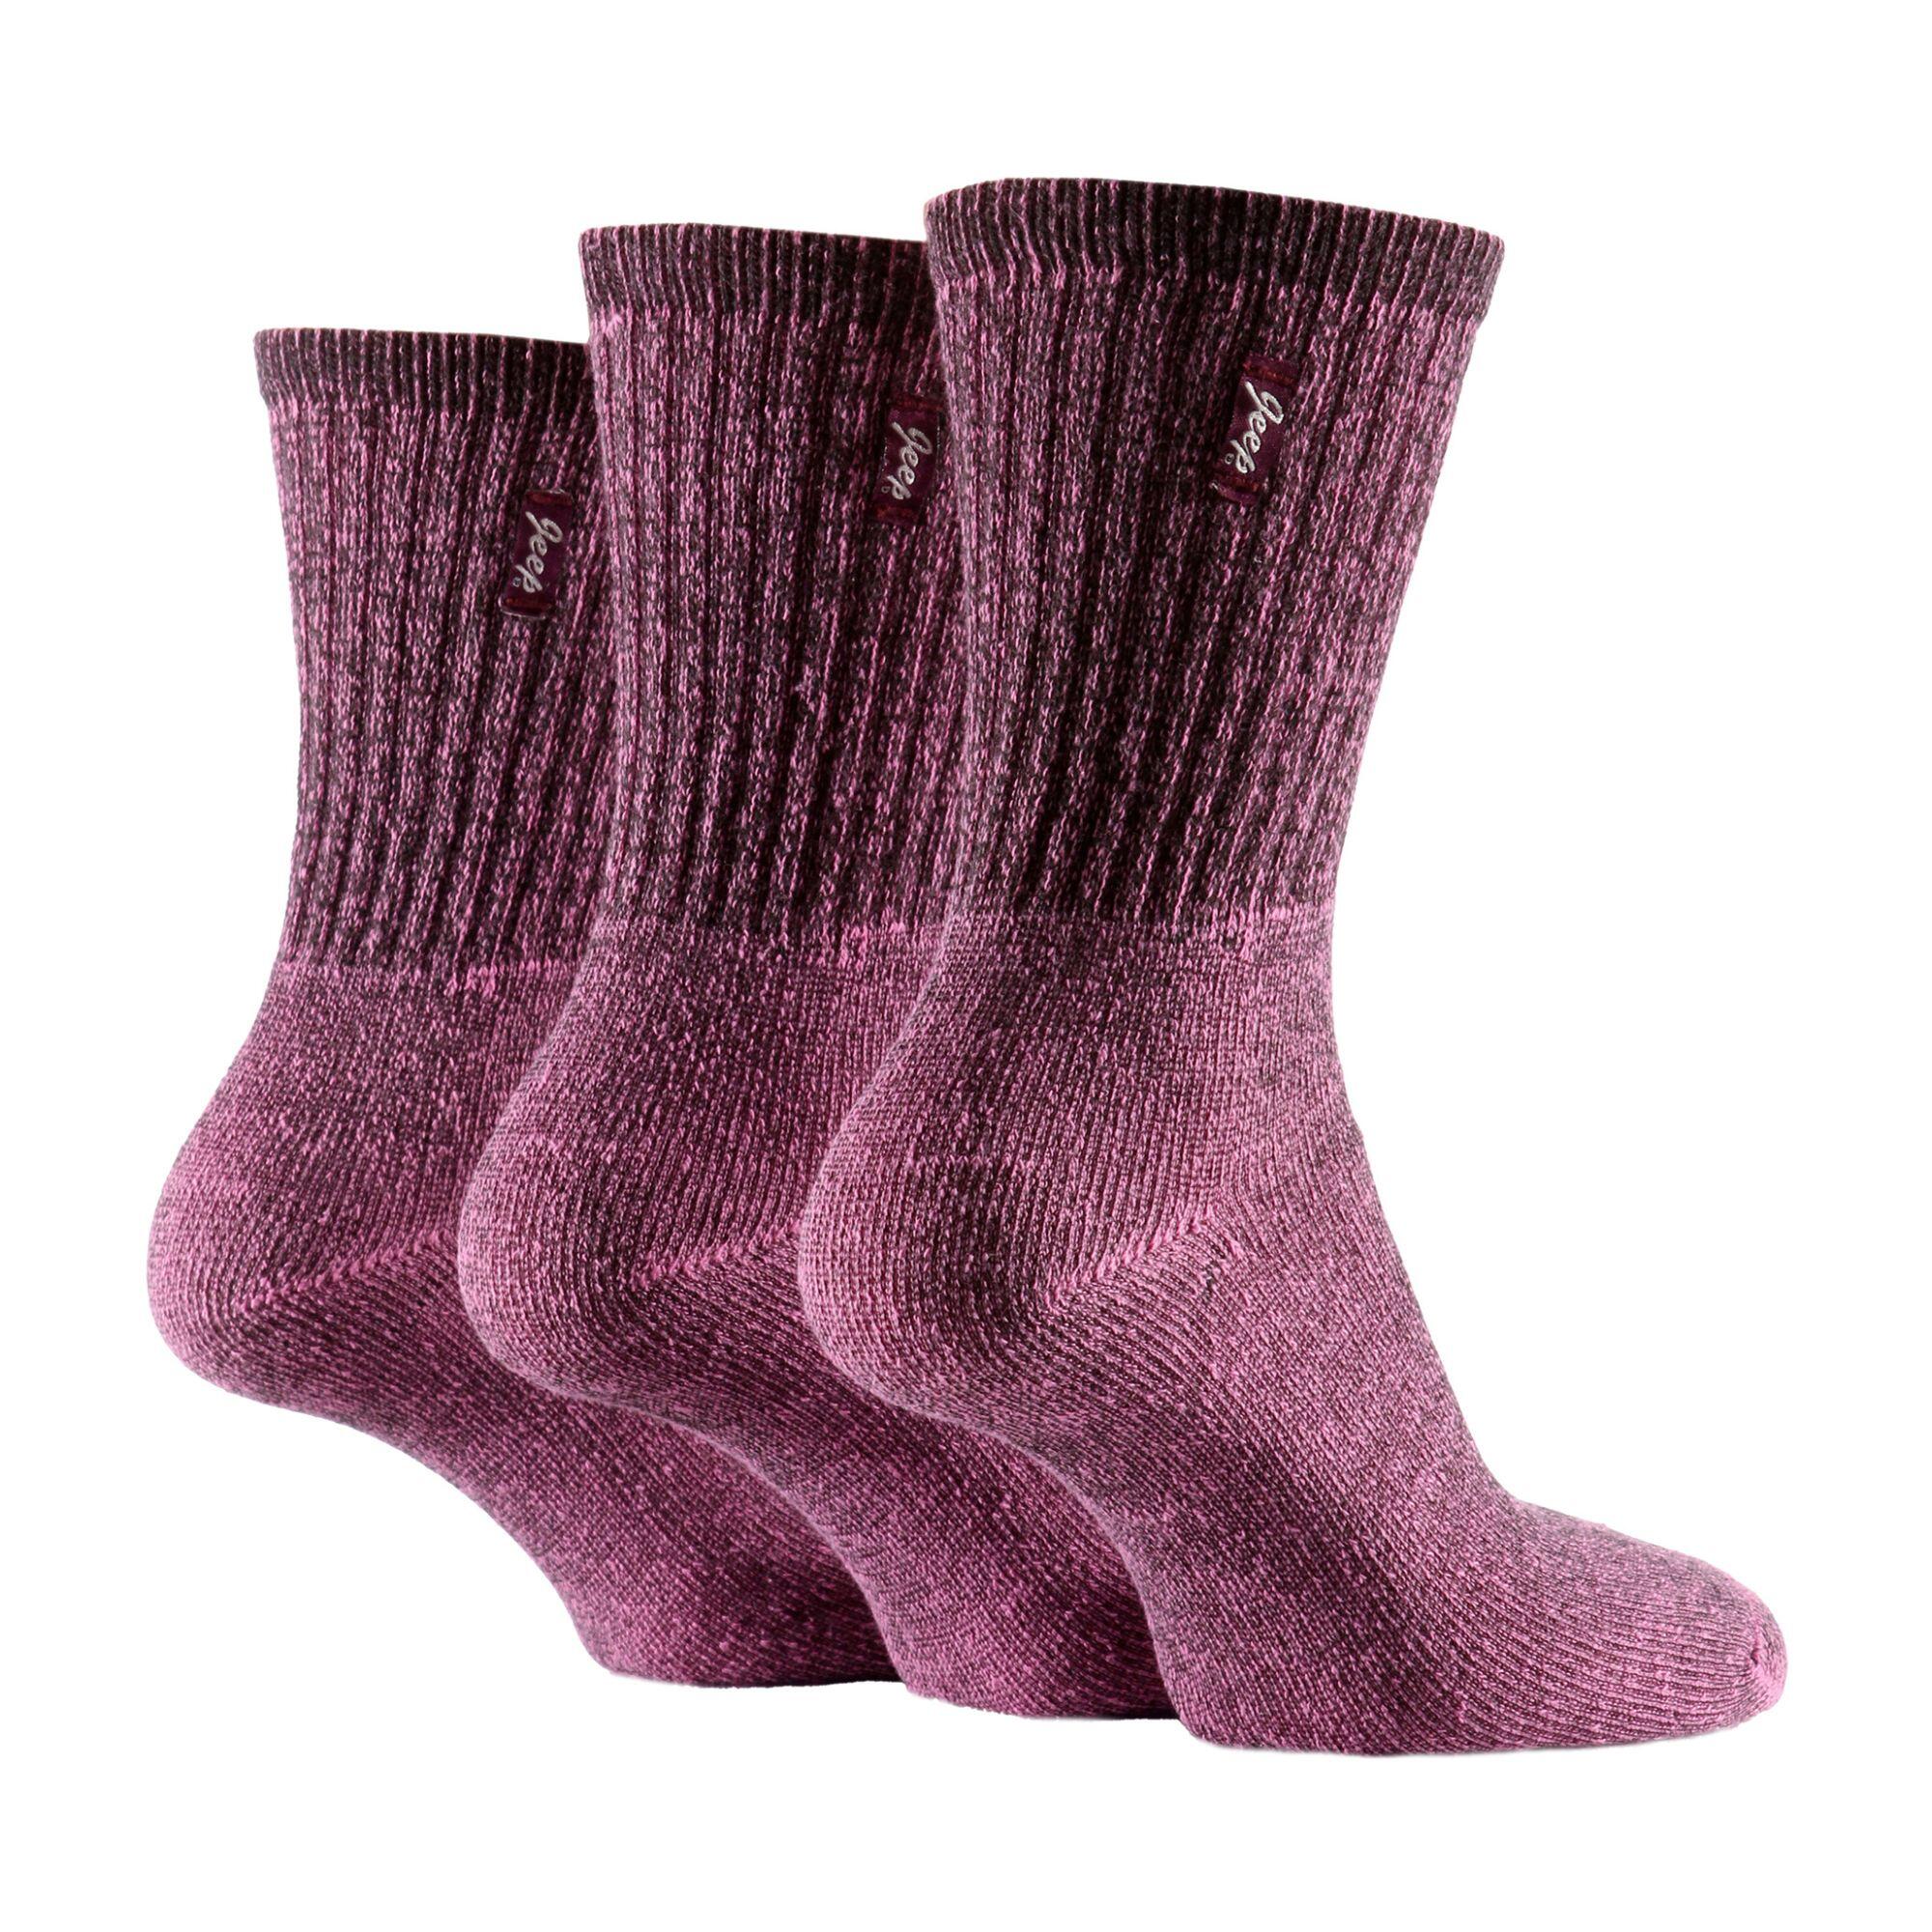 JEEP Ladies Vintage Anti-blister Cotton Sports Socks